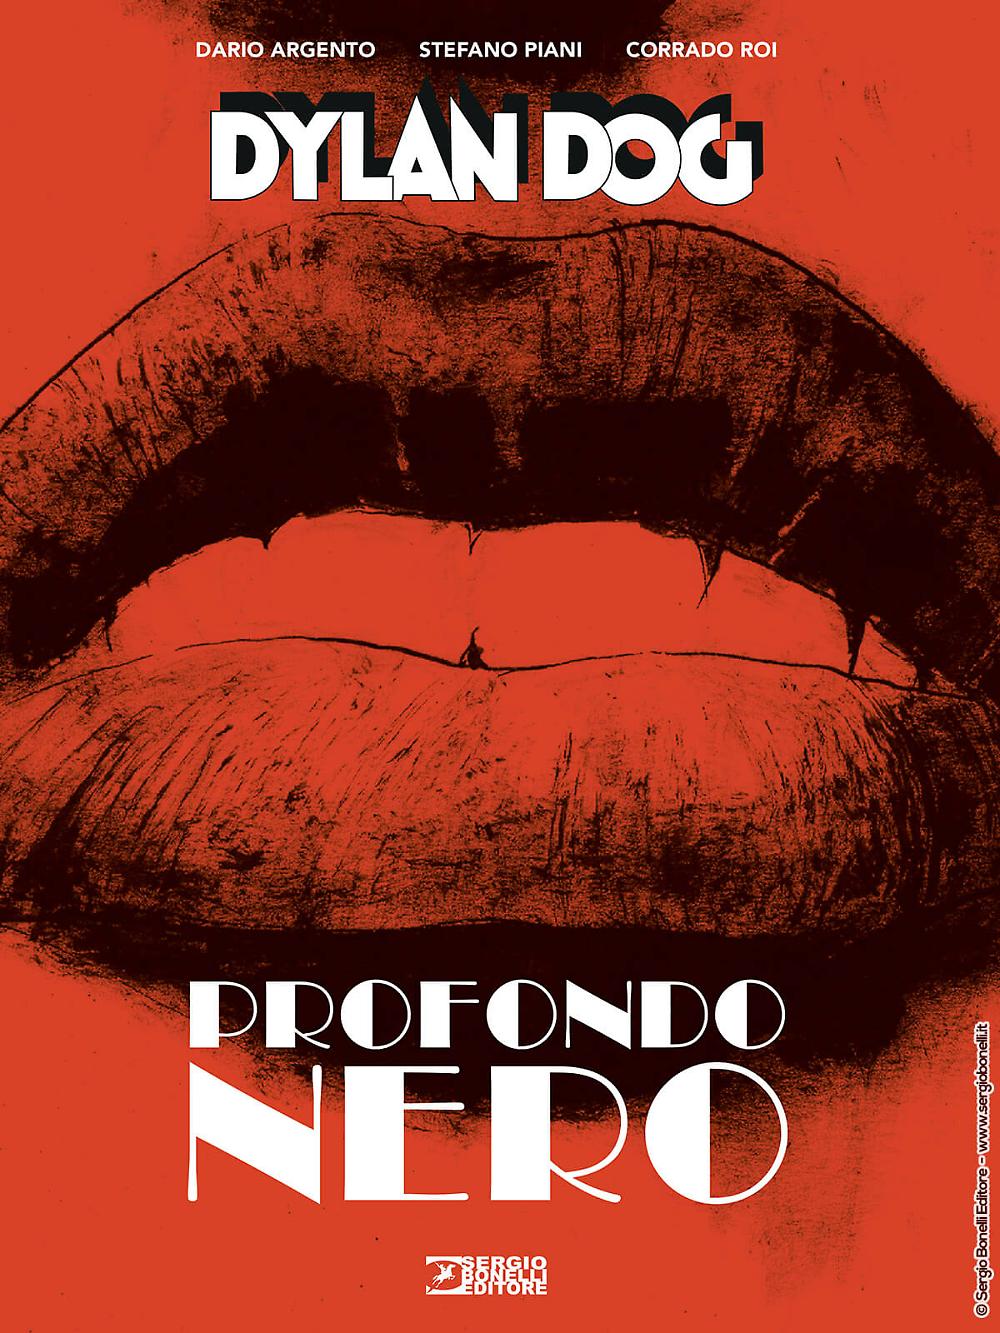 Profondo Nero: l’incontro tra Dylan Dog e Dario Argento